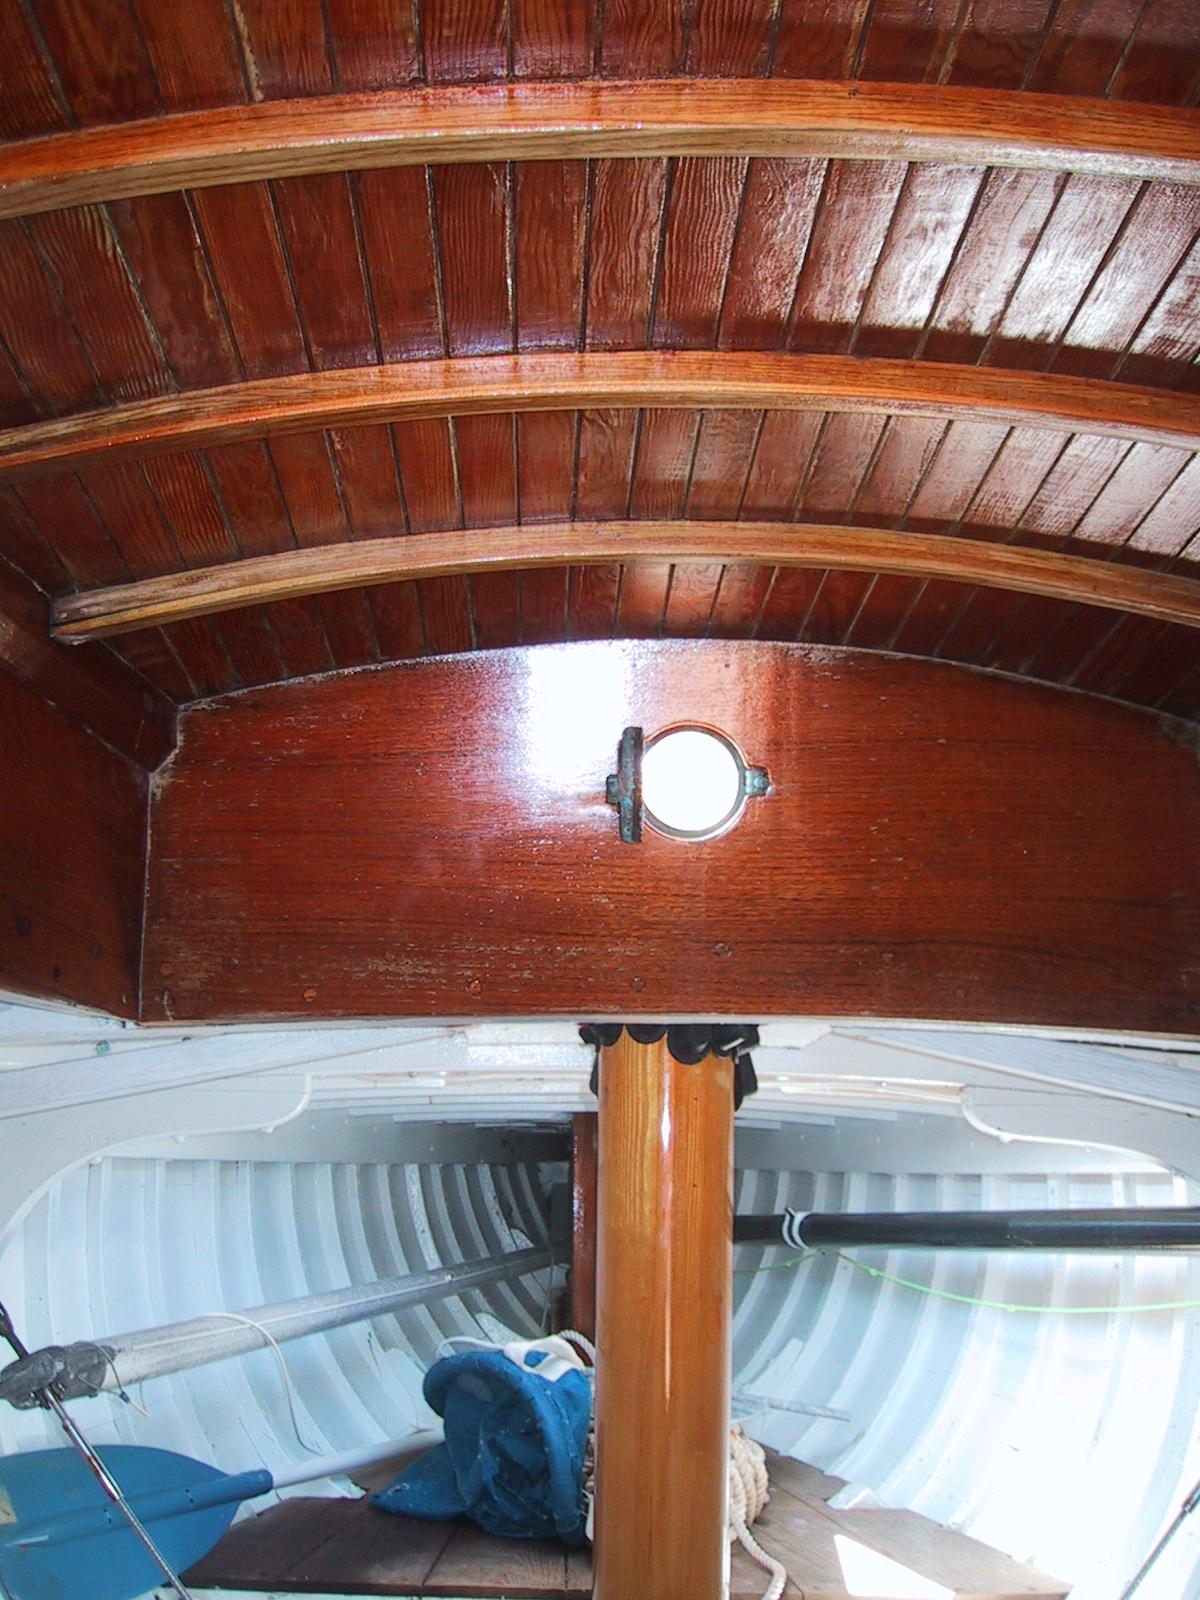 below deck of a yacht